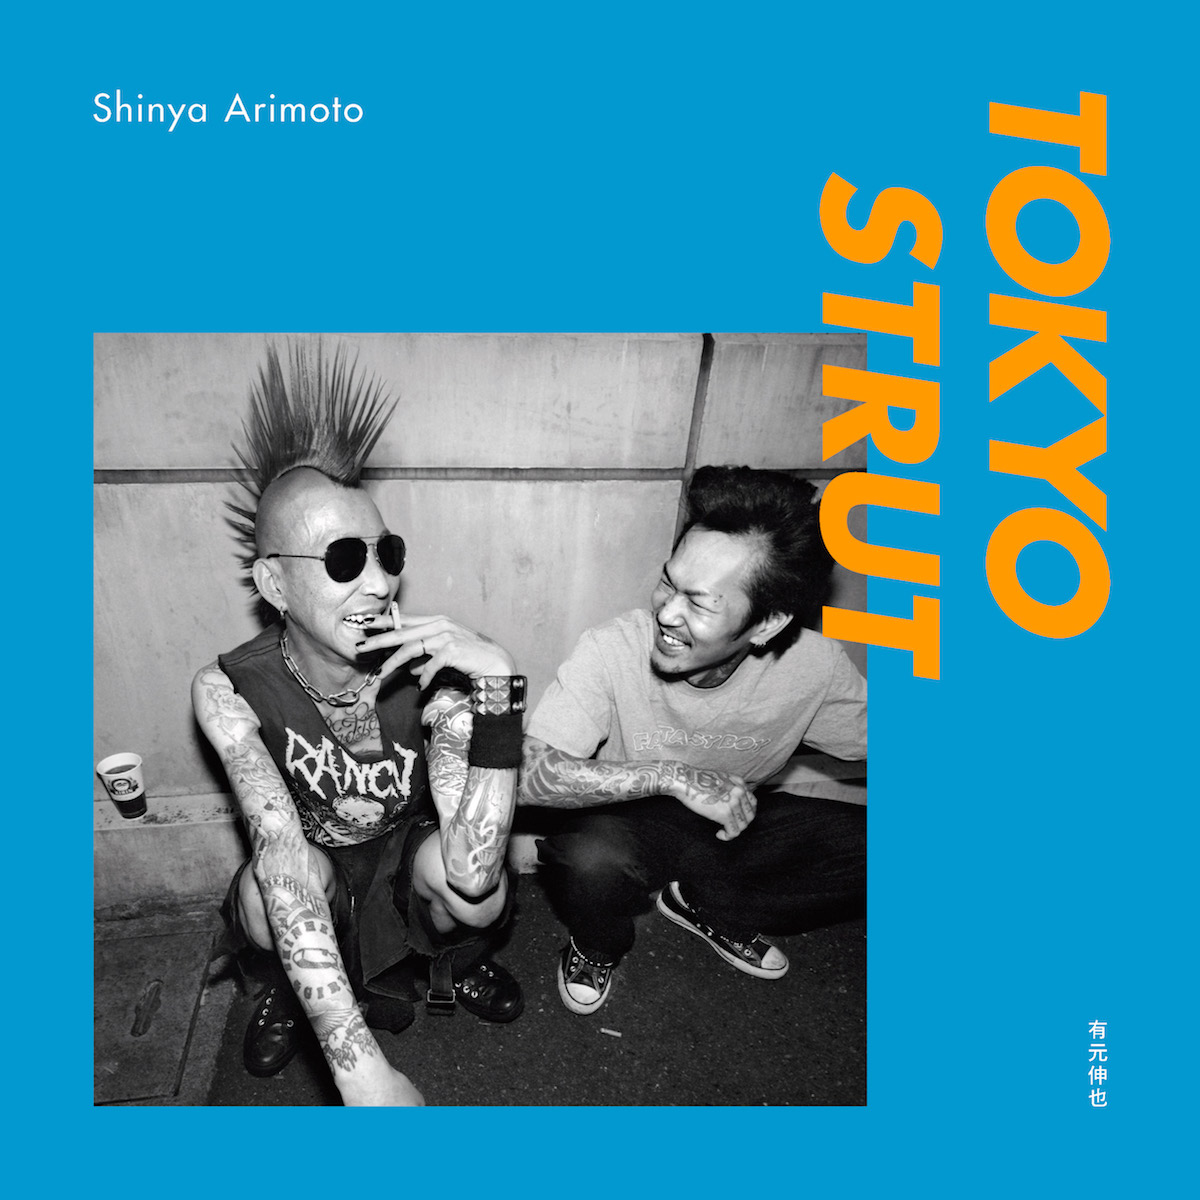 Shinya Arimoto Photobook “TOKYO STRUT” Publication commemorative exhibition